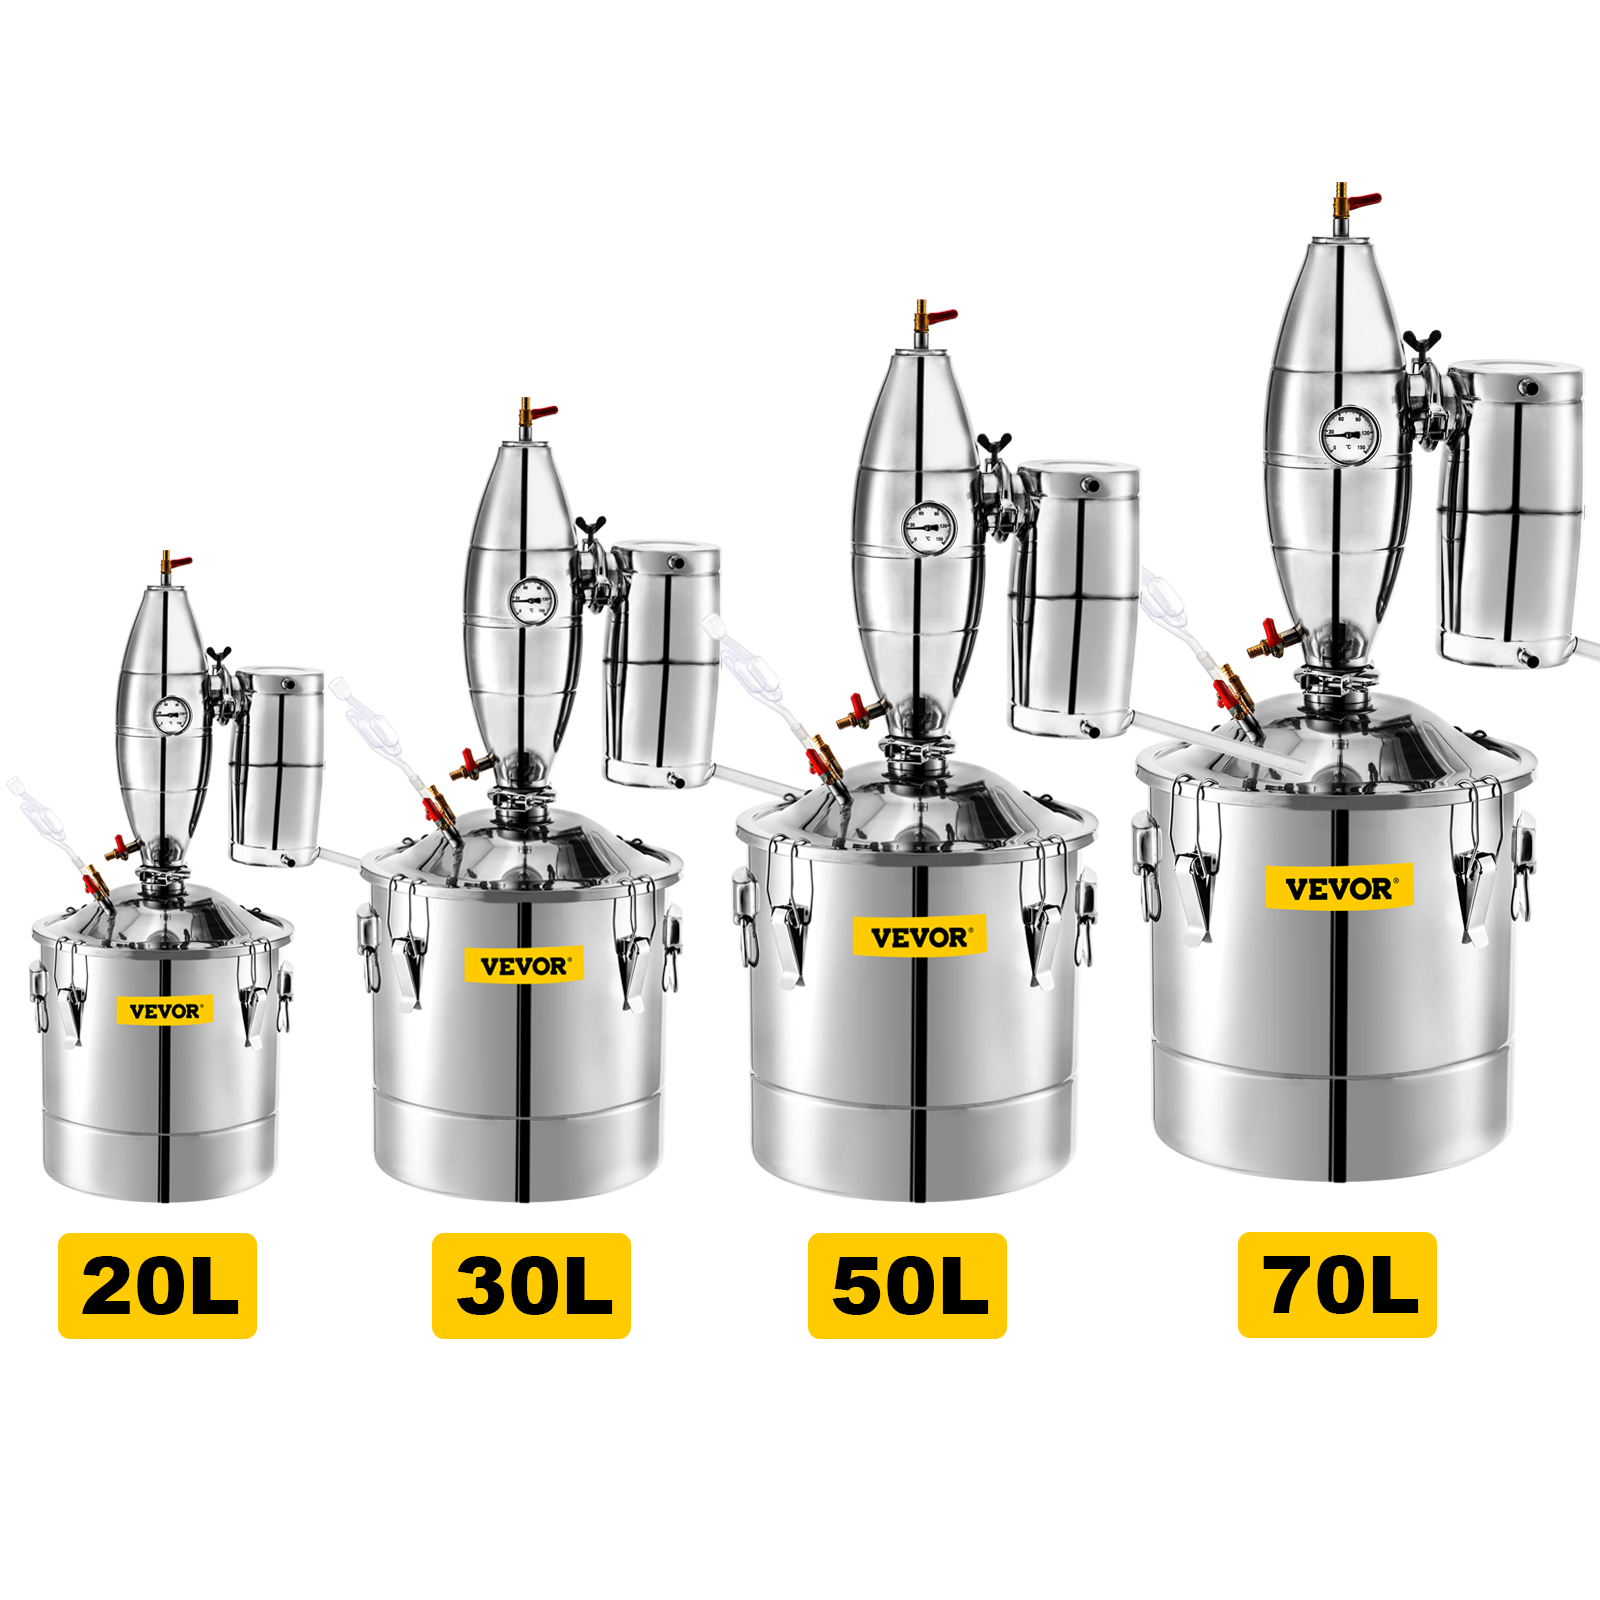 VEVOR 20L/50L/70L Alkohol Destillieranlage Destilliergerät Wasser Distiller